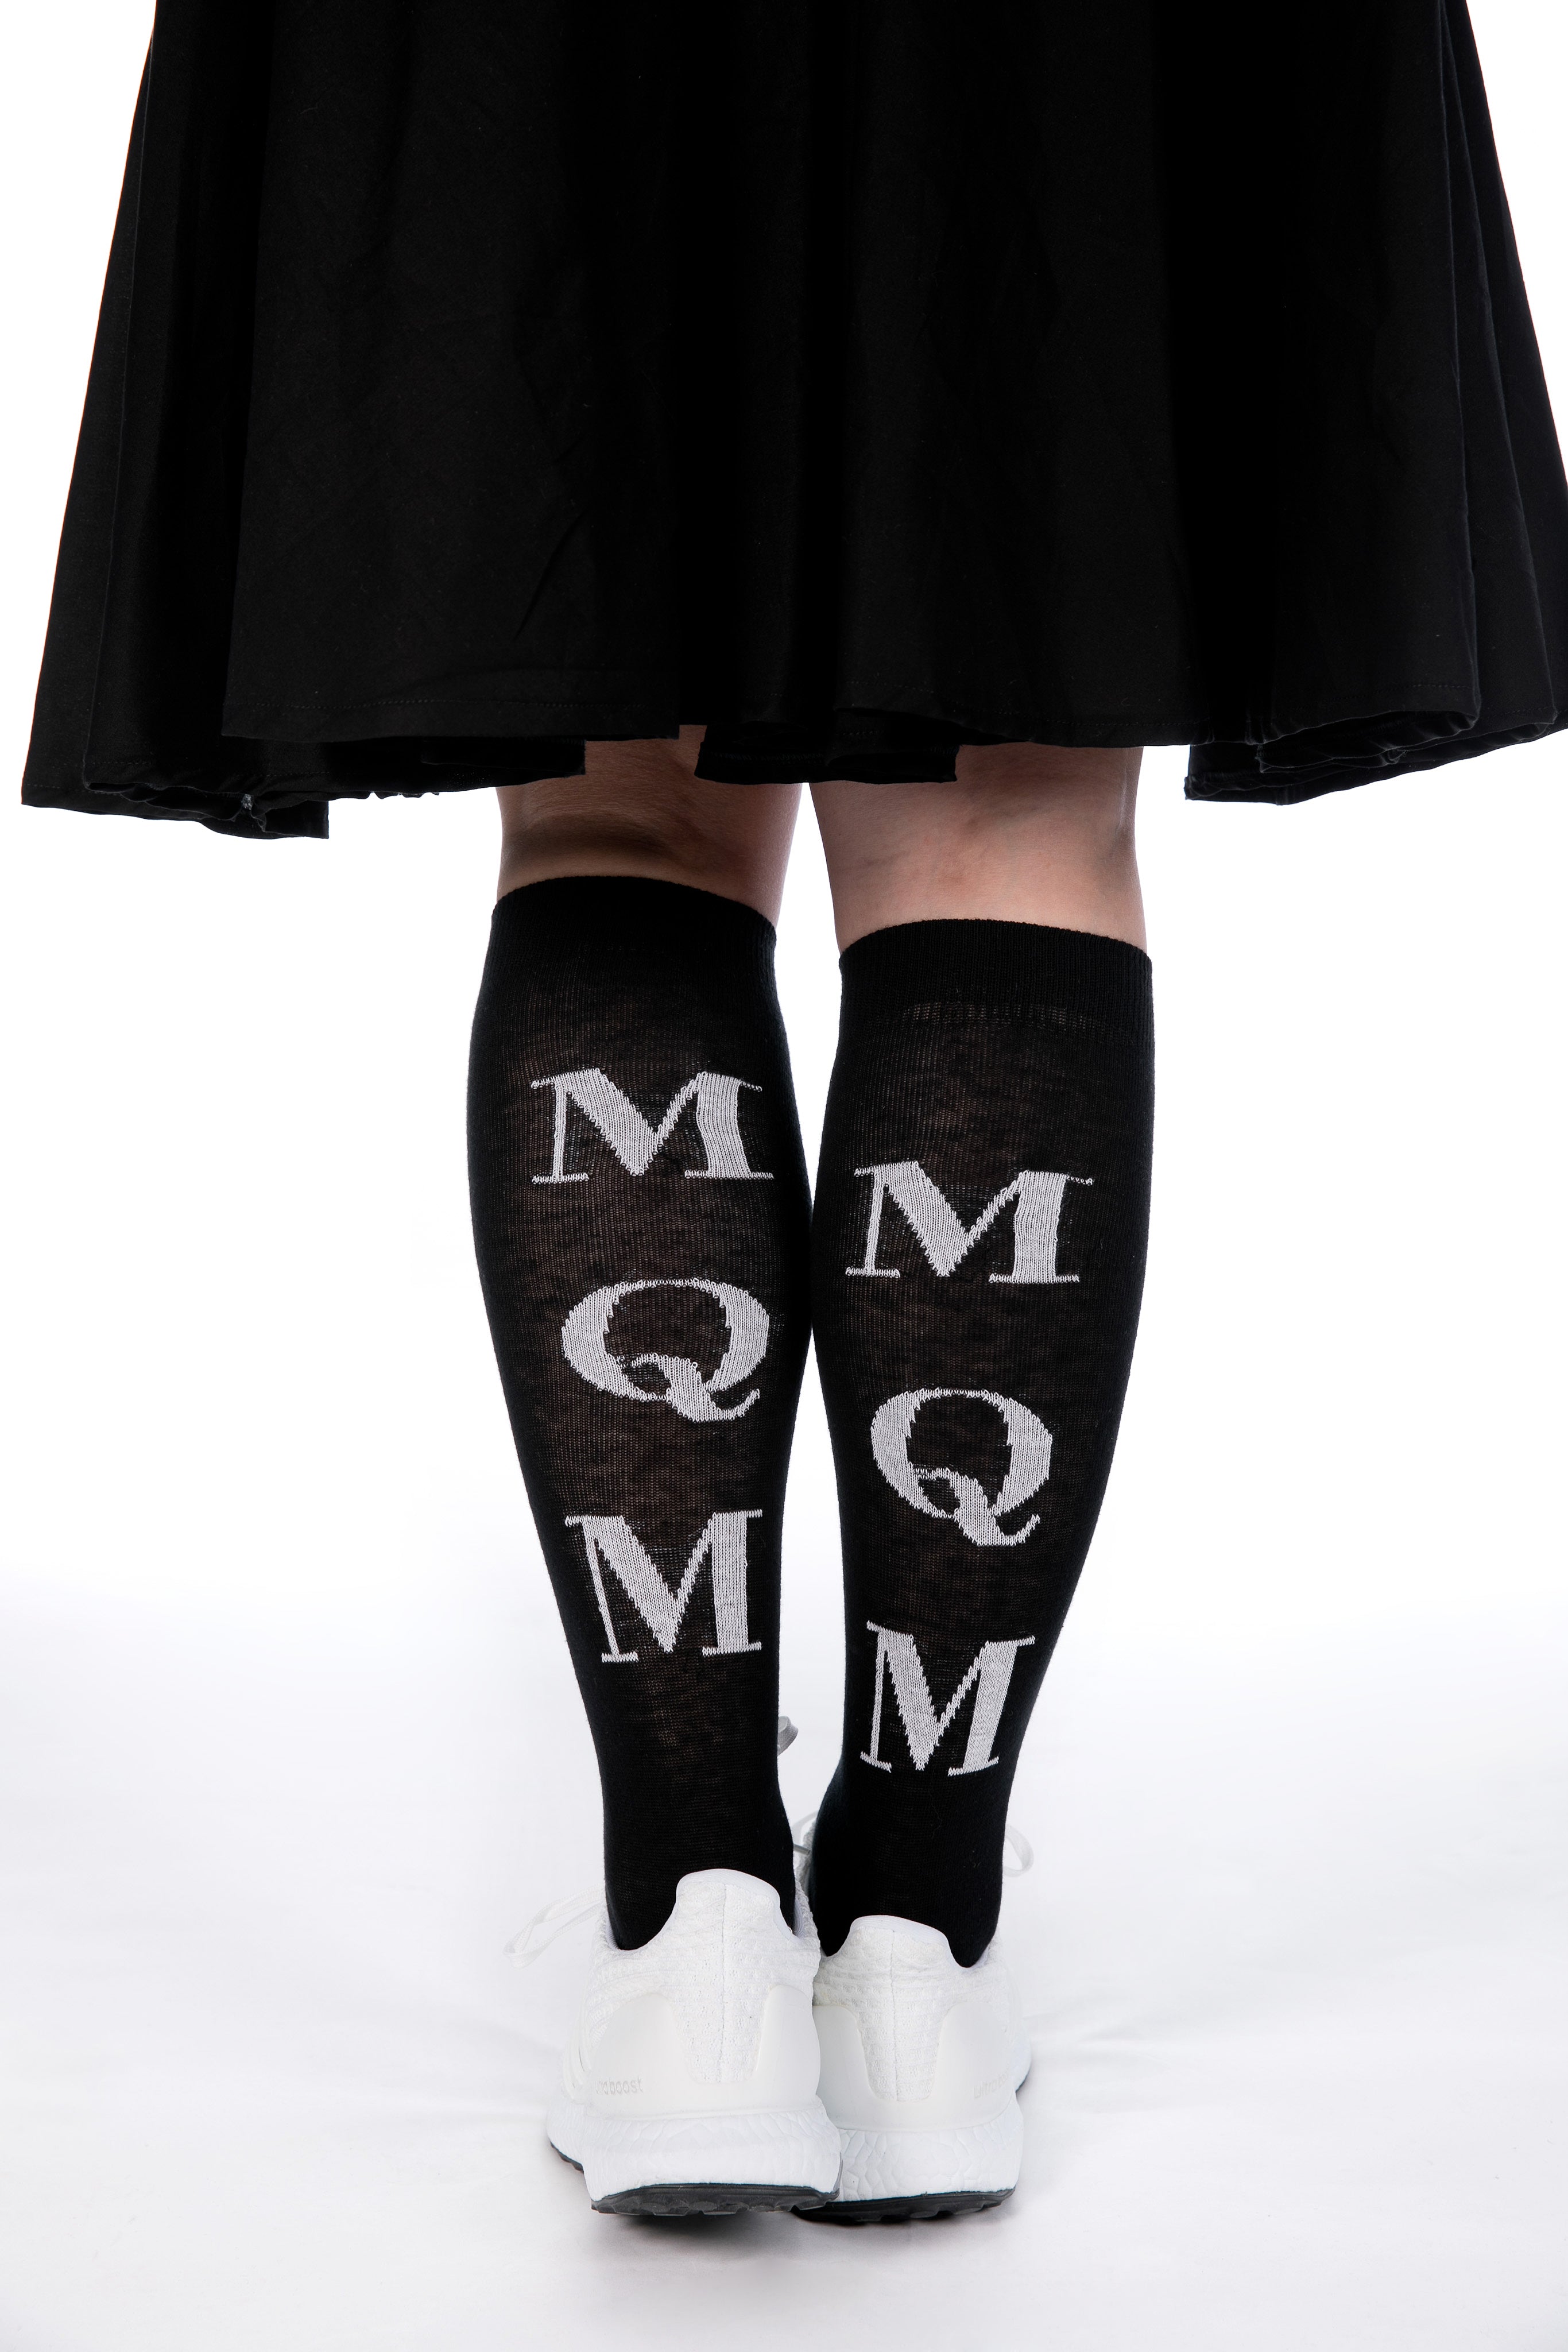 MariaQueenMaria Socks